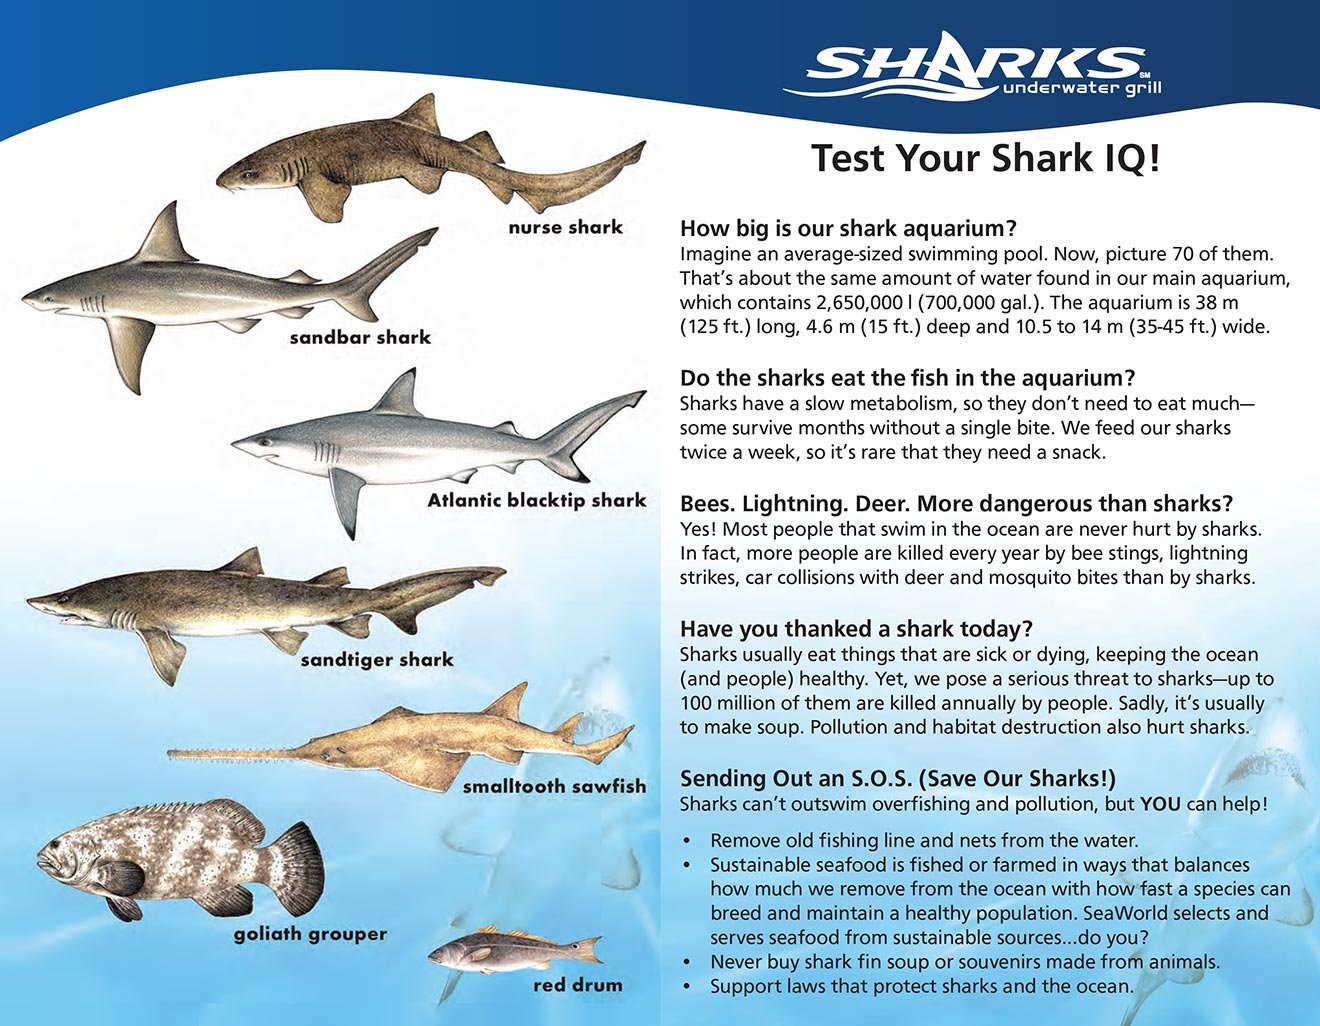 Test your Shark IQ